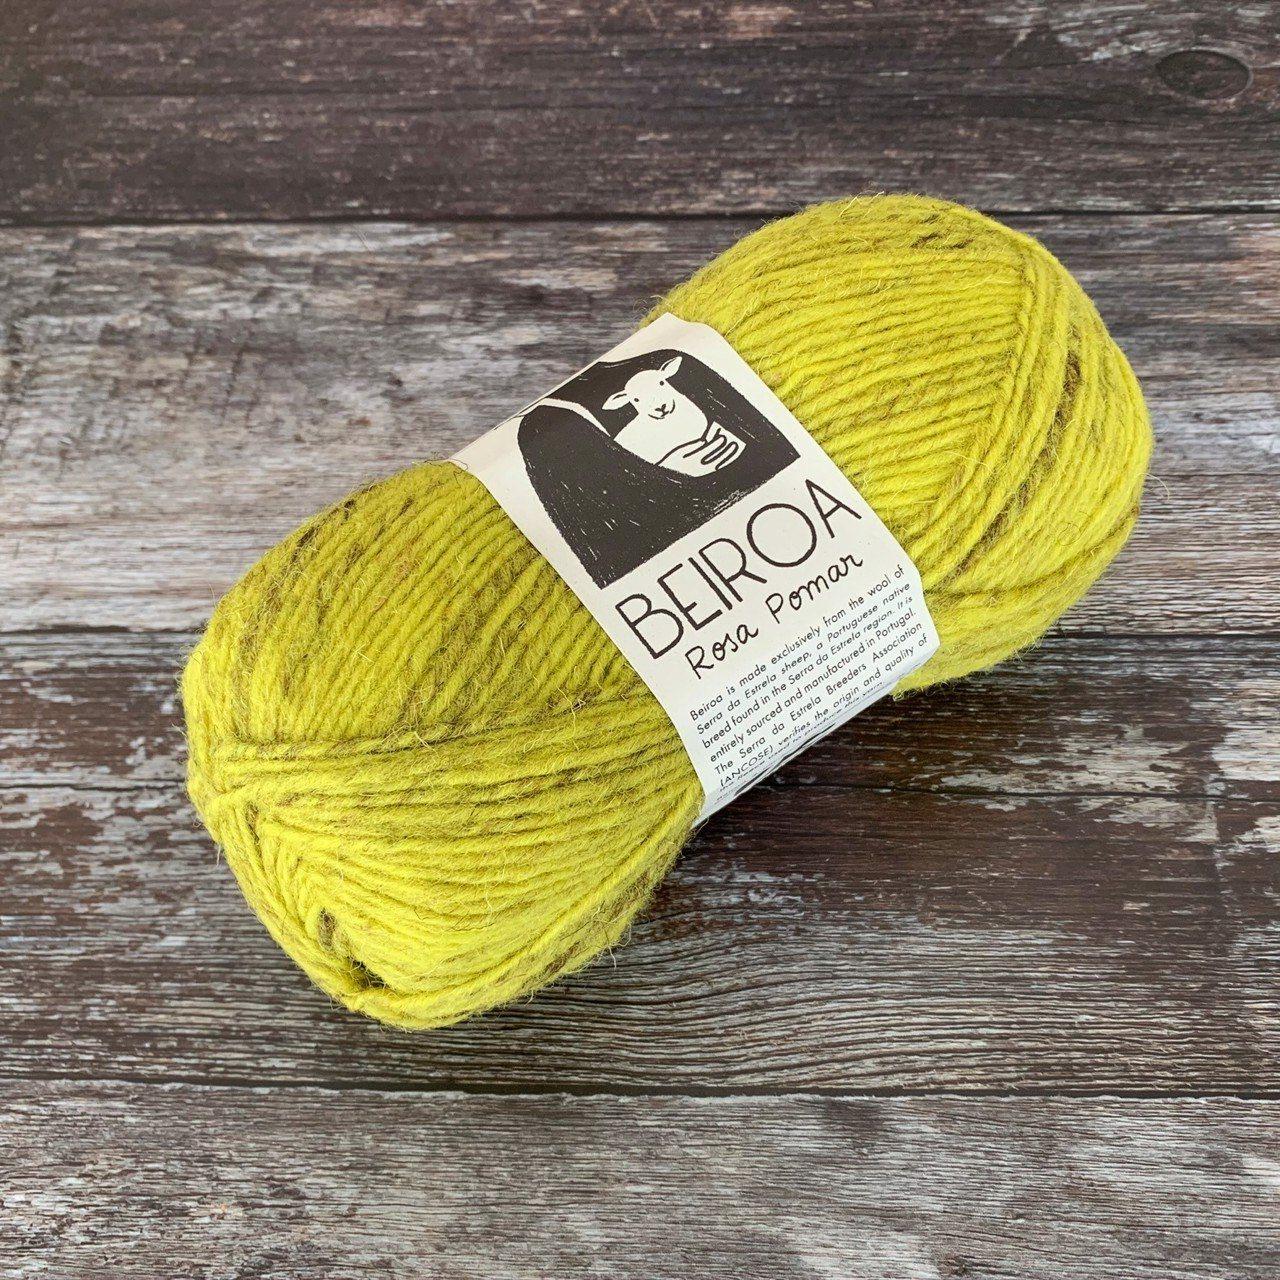 Retrosaria Retrosaria Beiroa - 595 - Worsted Knitting Yarn